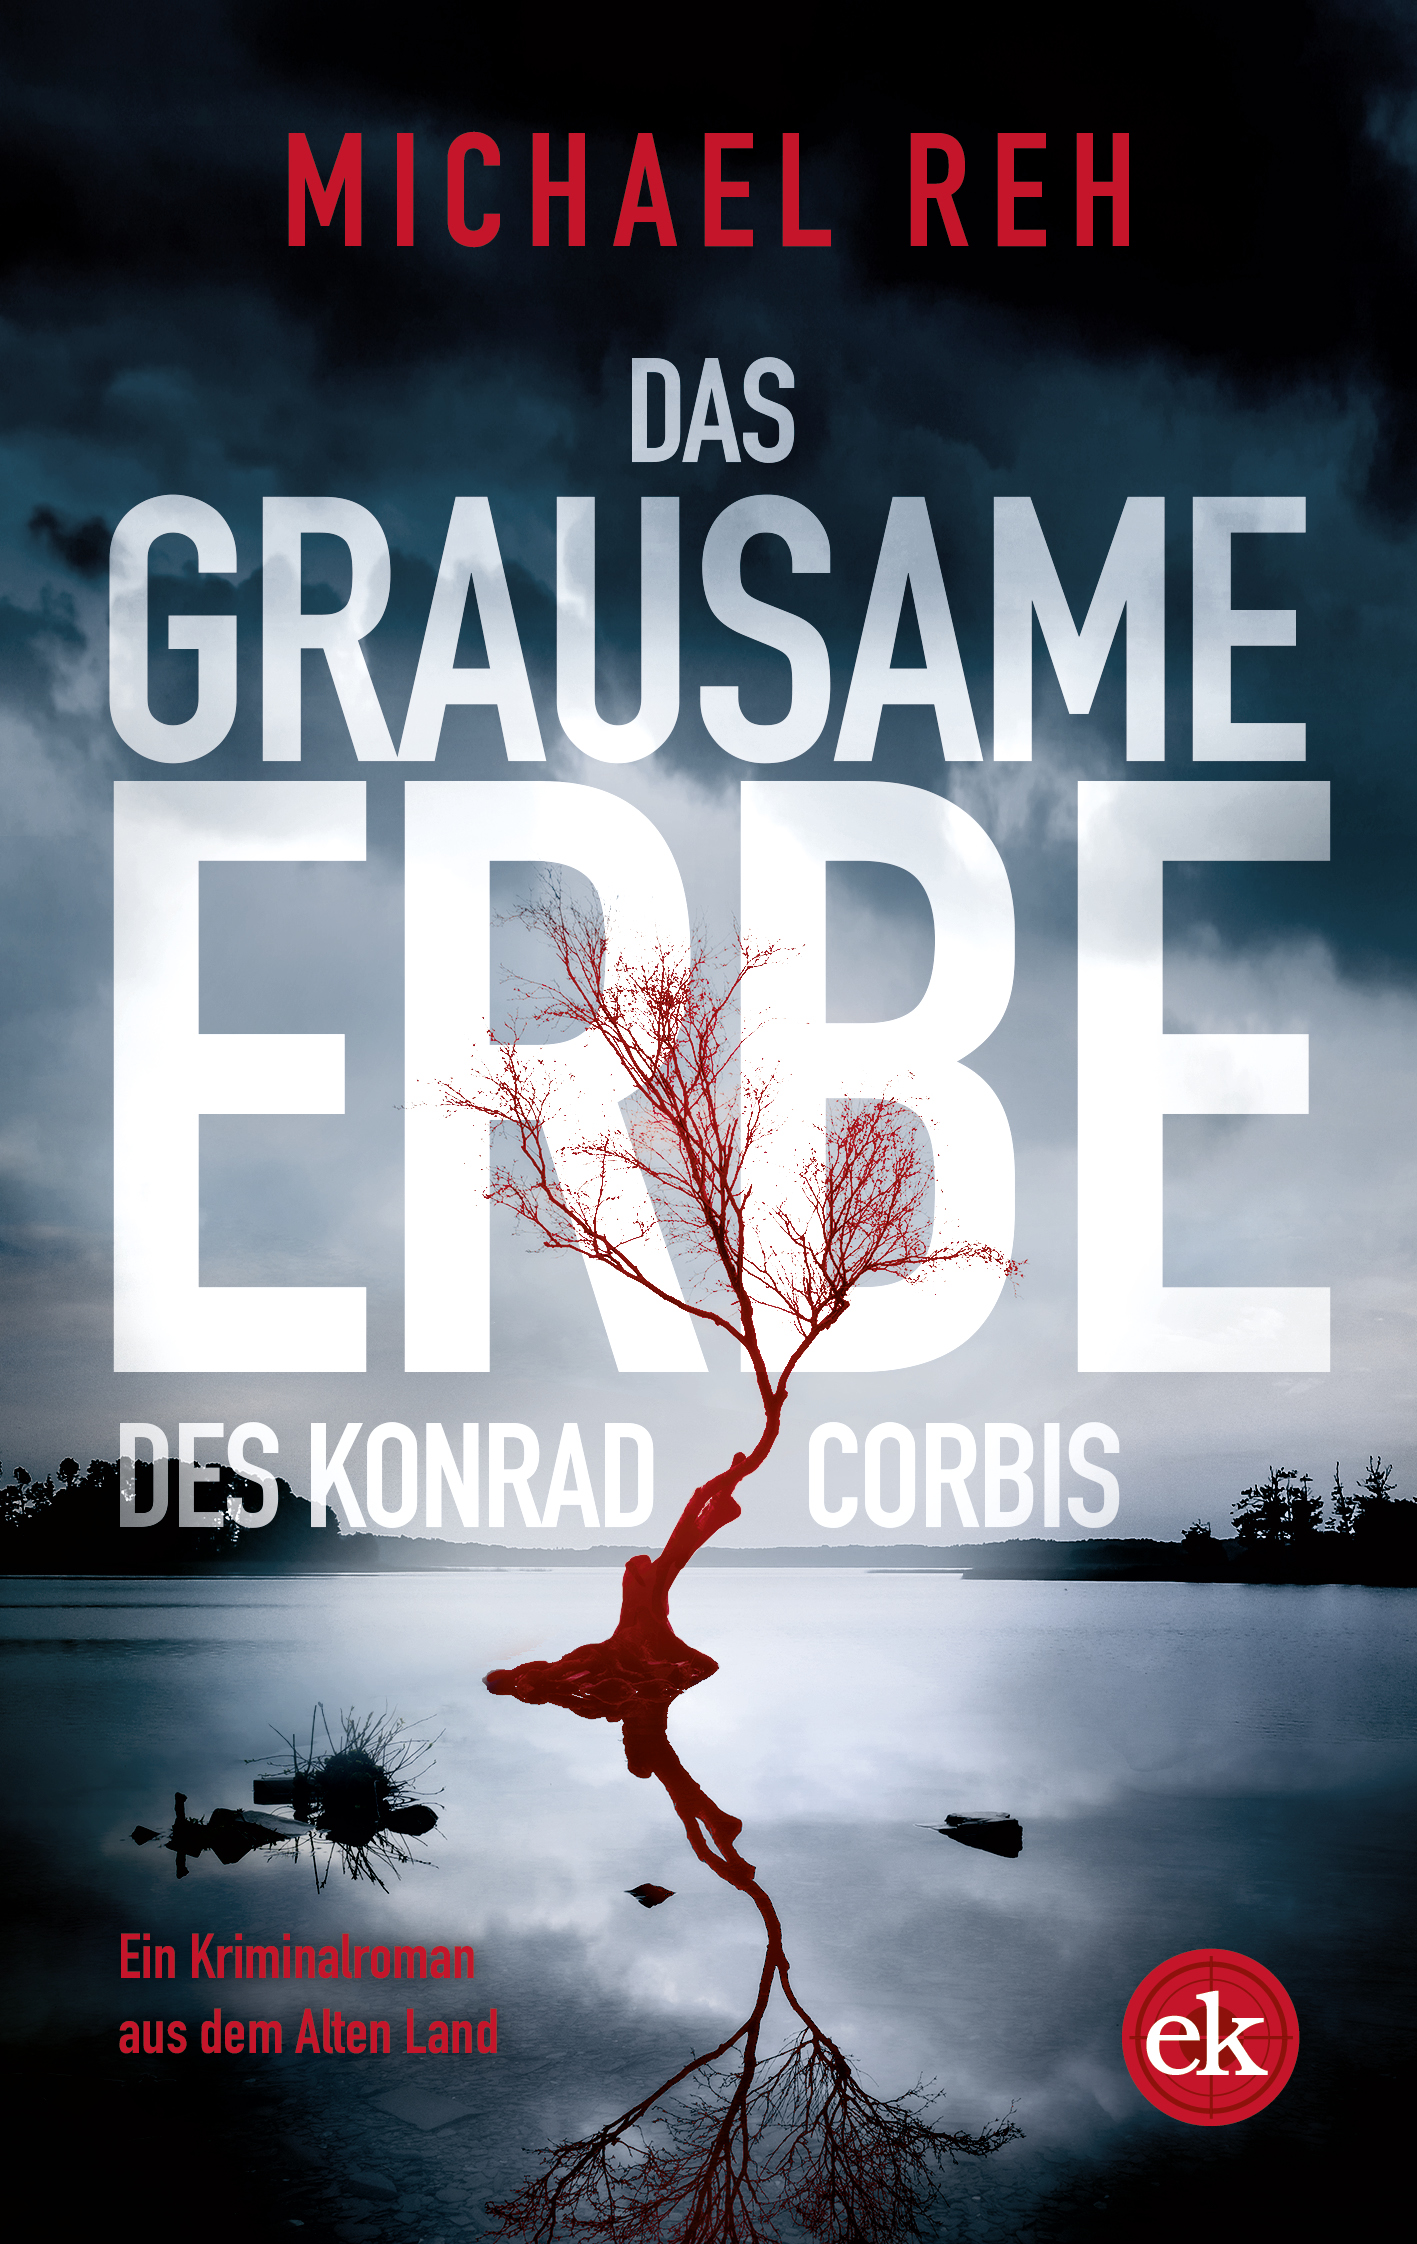 Michael Reh Autor - Buch Das grausame Erbe des Konrad Corbis - ek edition krimi